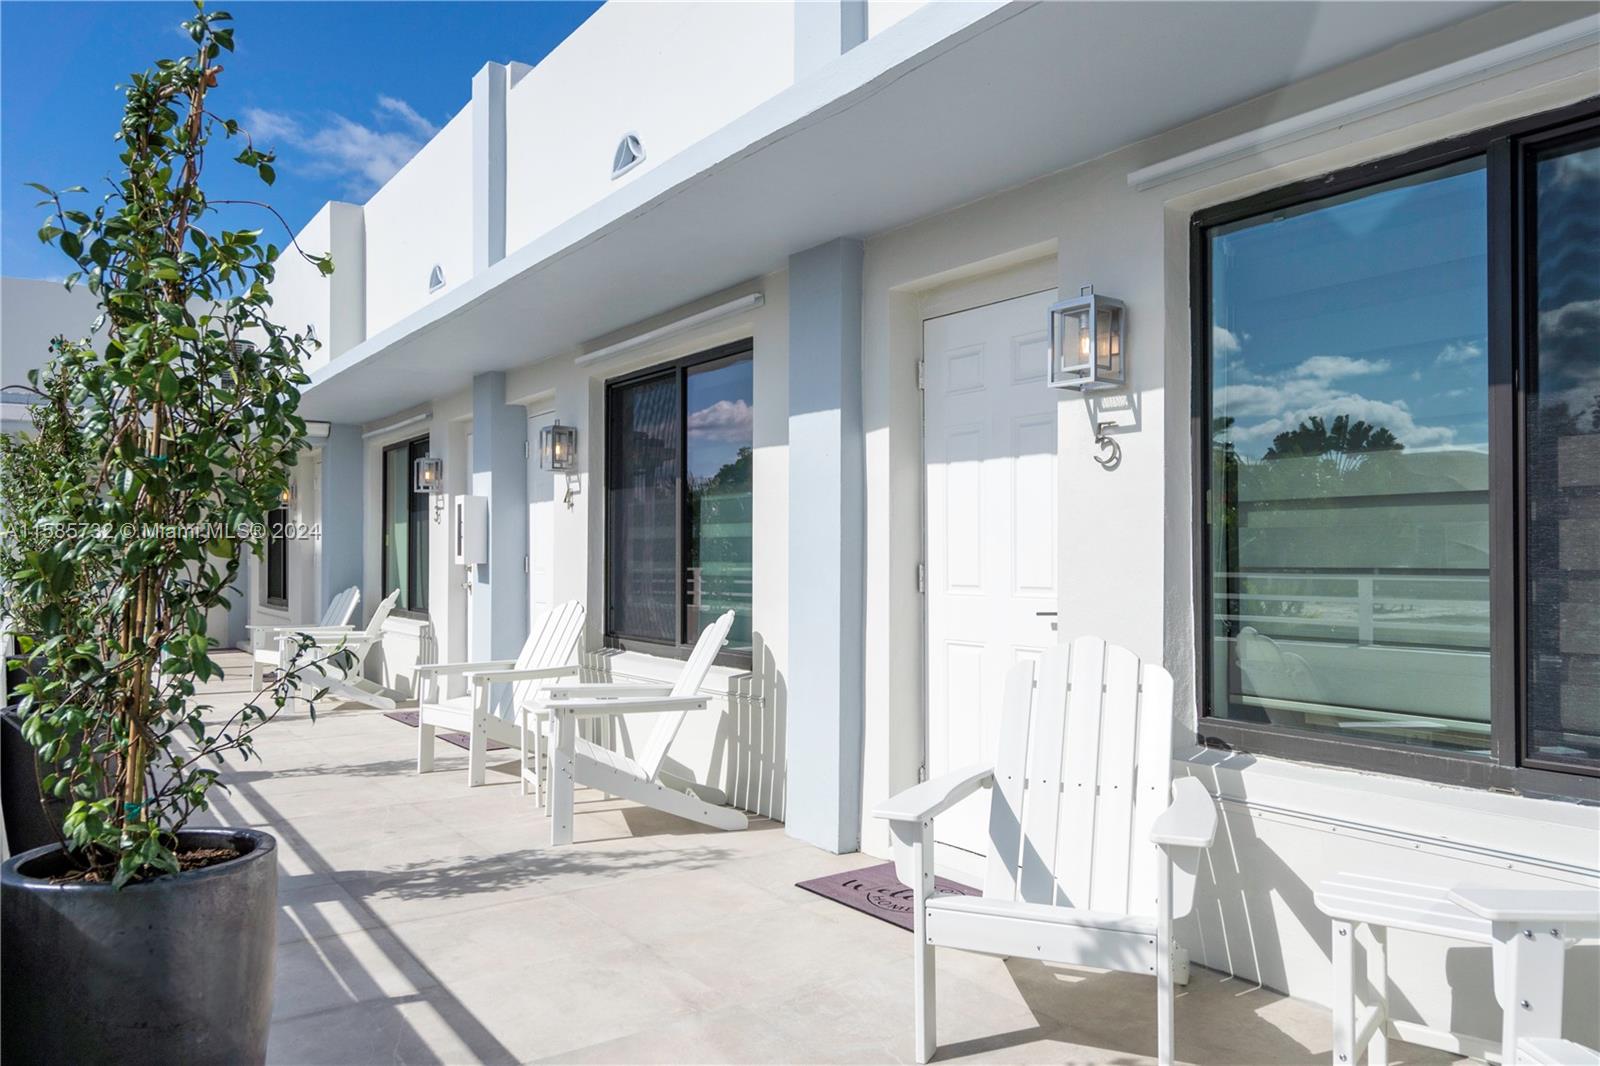 Rental Property at 1191 71st St 2, Miami Beach, Miami-Dade County, Florida - Bathrooms: 1  - $1,900 MO.